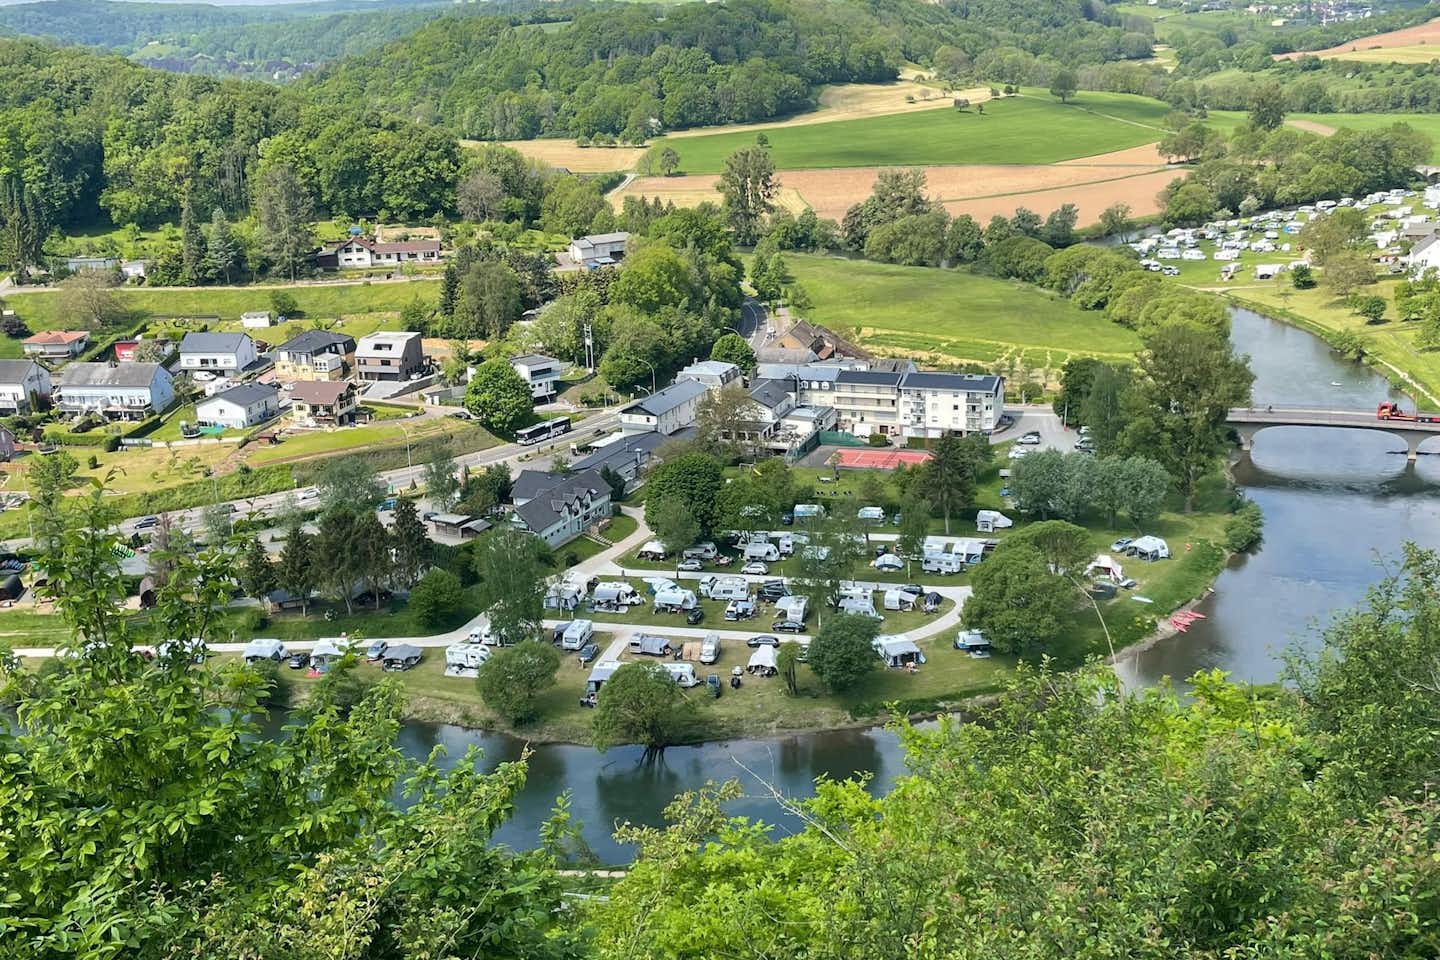 Vodatent @ Camping du Rivage  - Luftaufnahme des Campingplatzes am Fluss